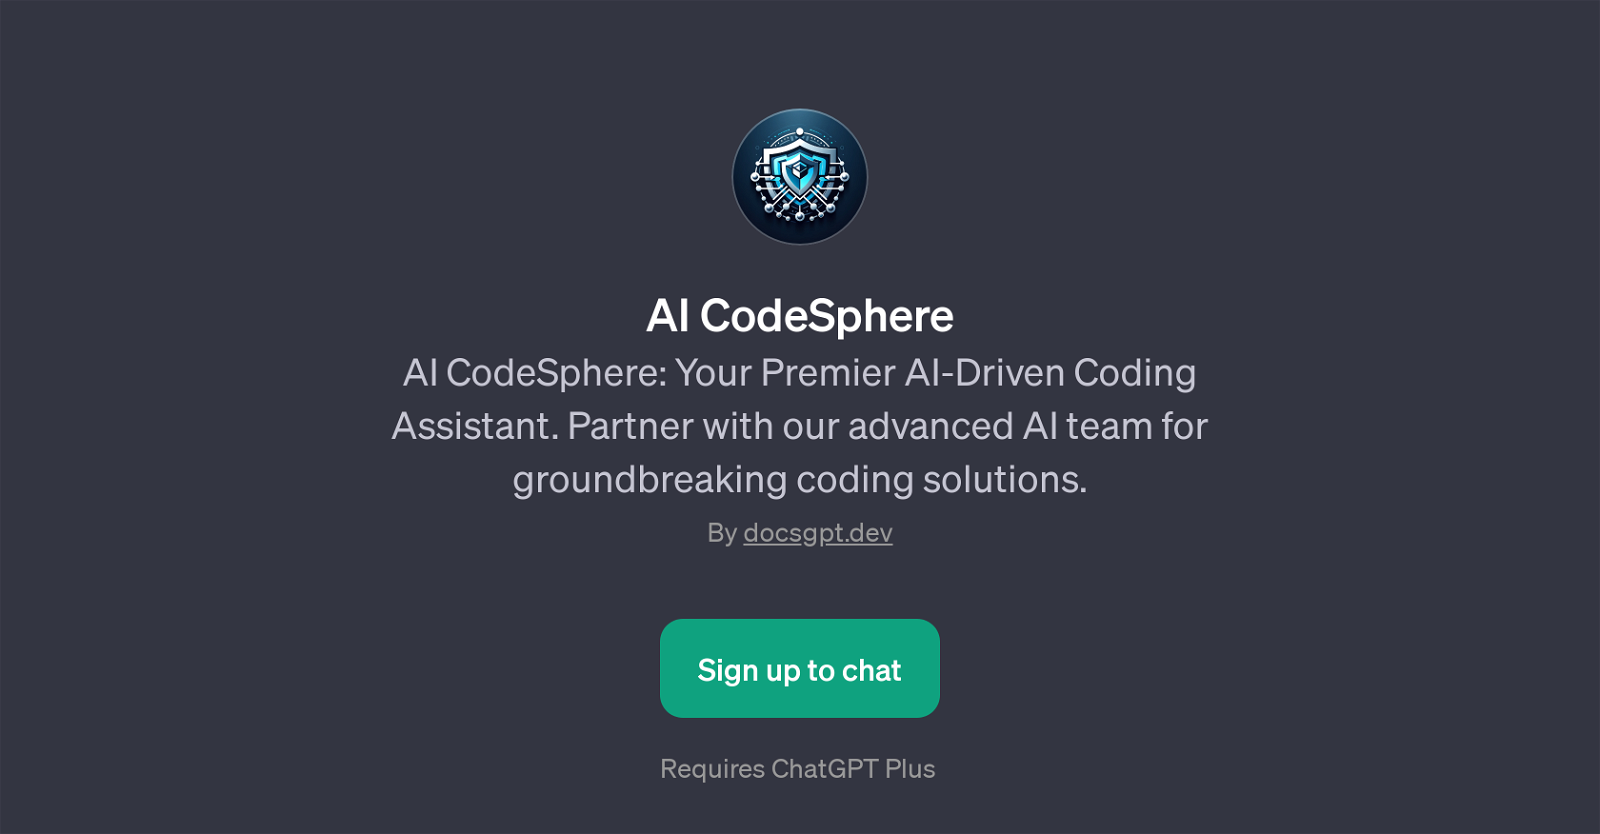 AI CodeSphere website